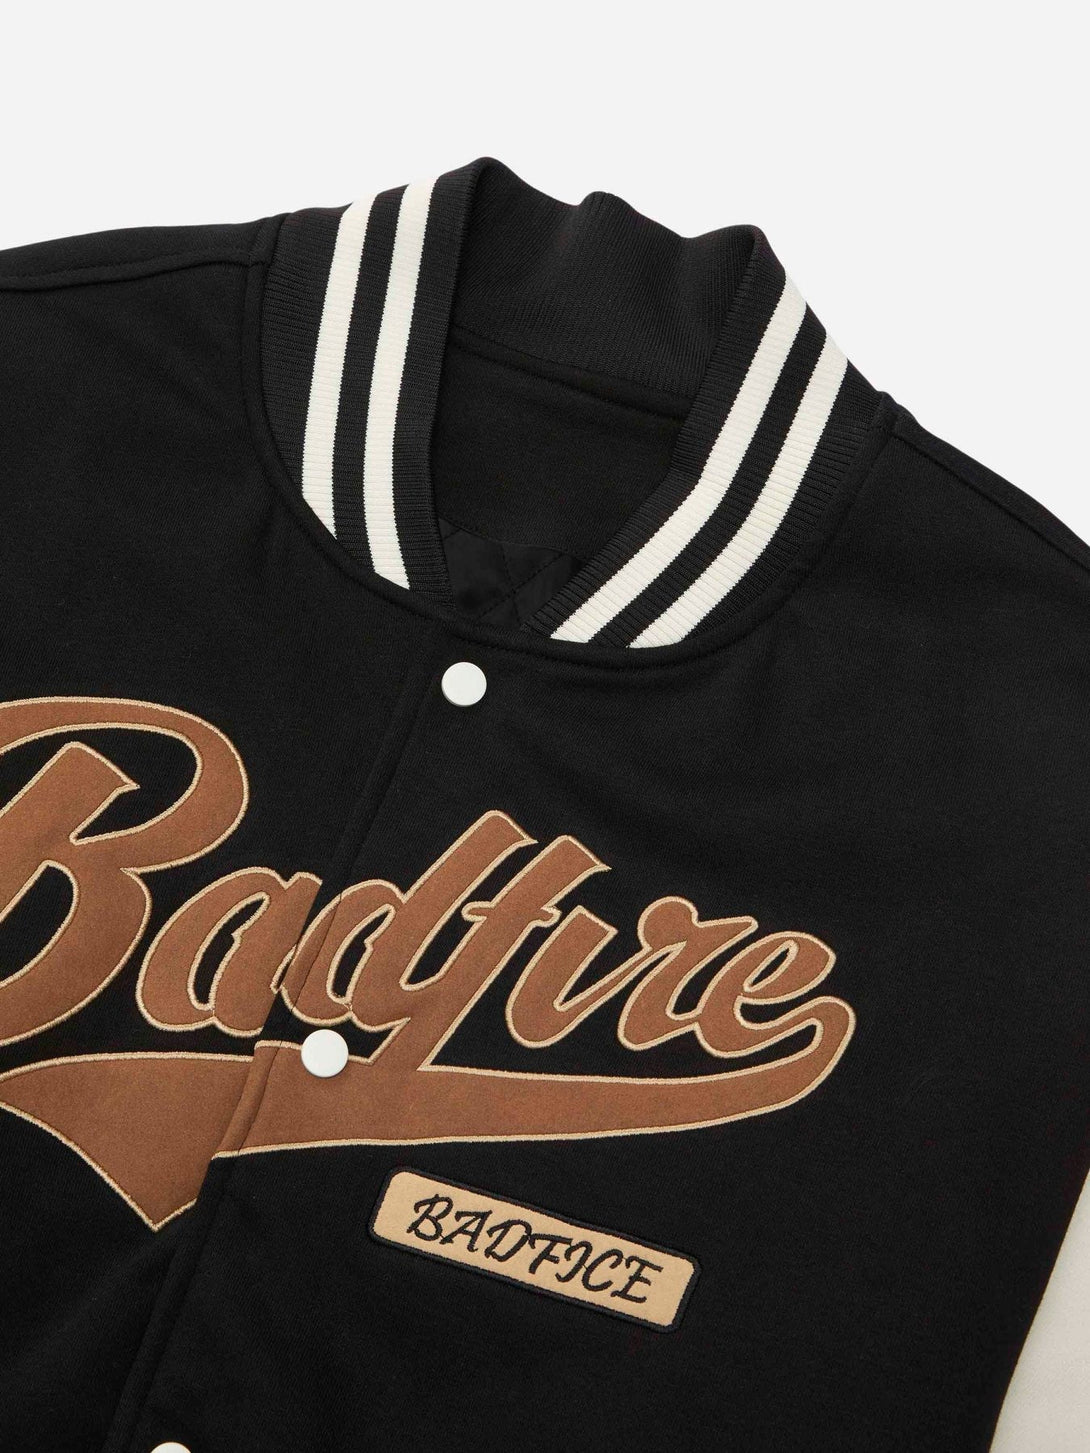 Majesda® - Embroidered Baseball Uniform- Outfit Ideas - Streetwear Fashion - majesda.com